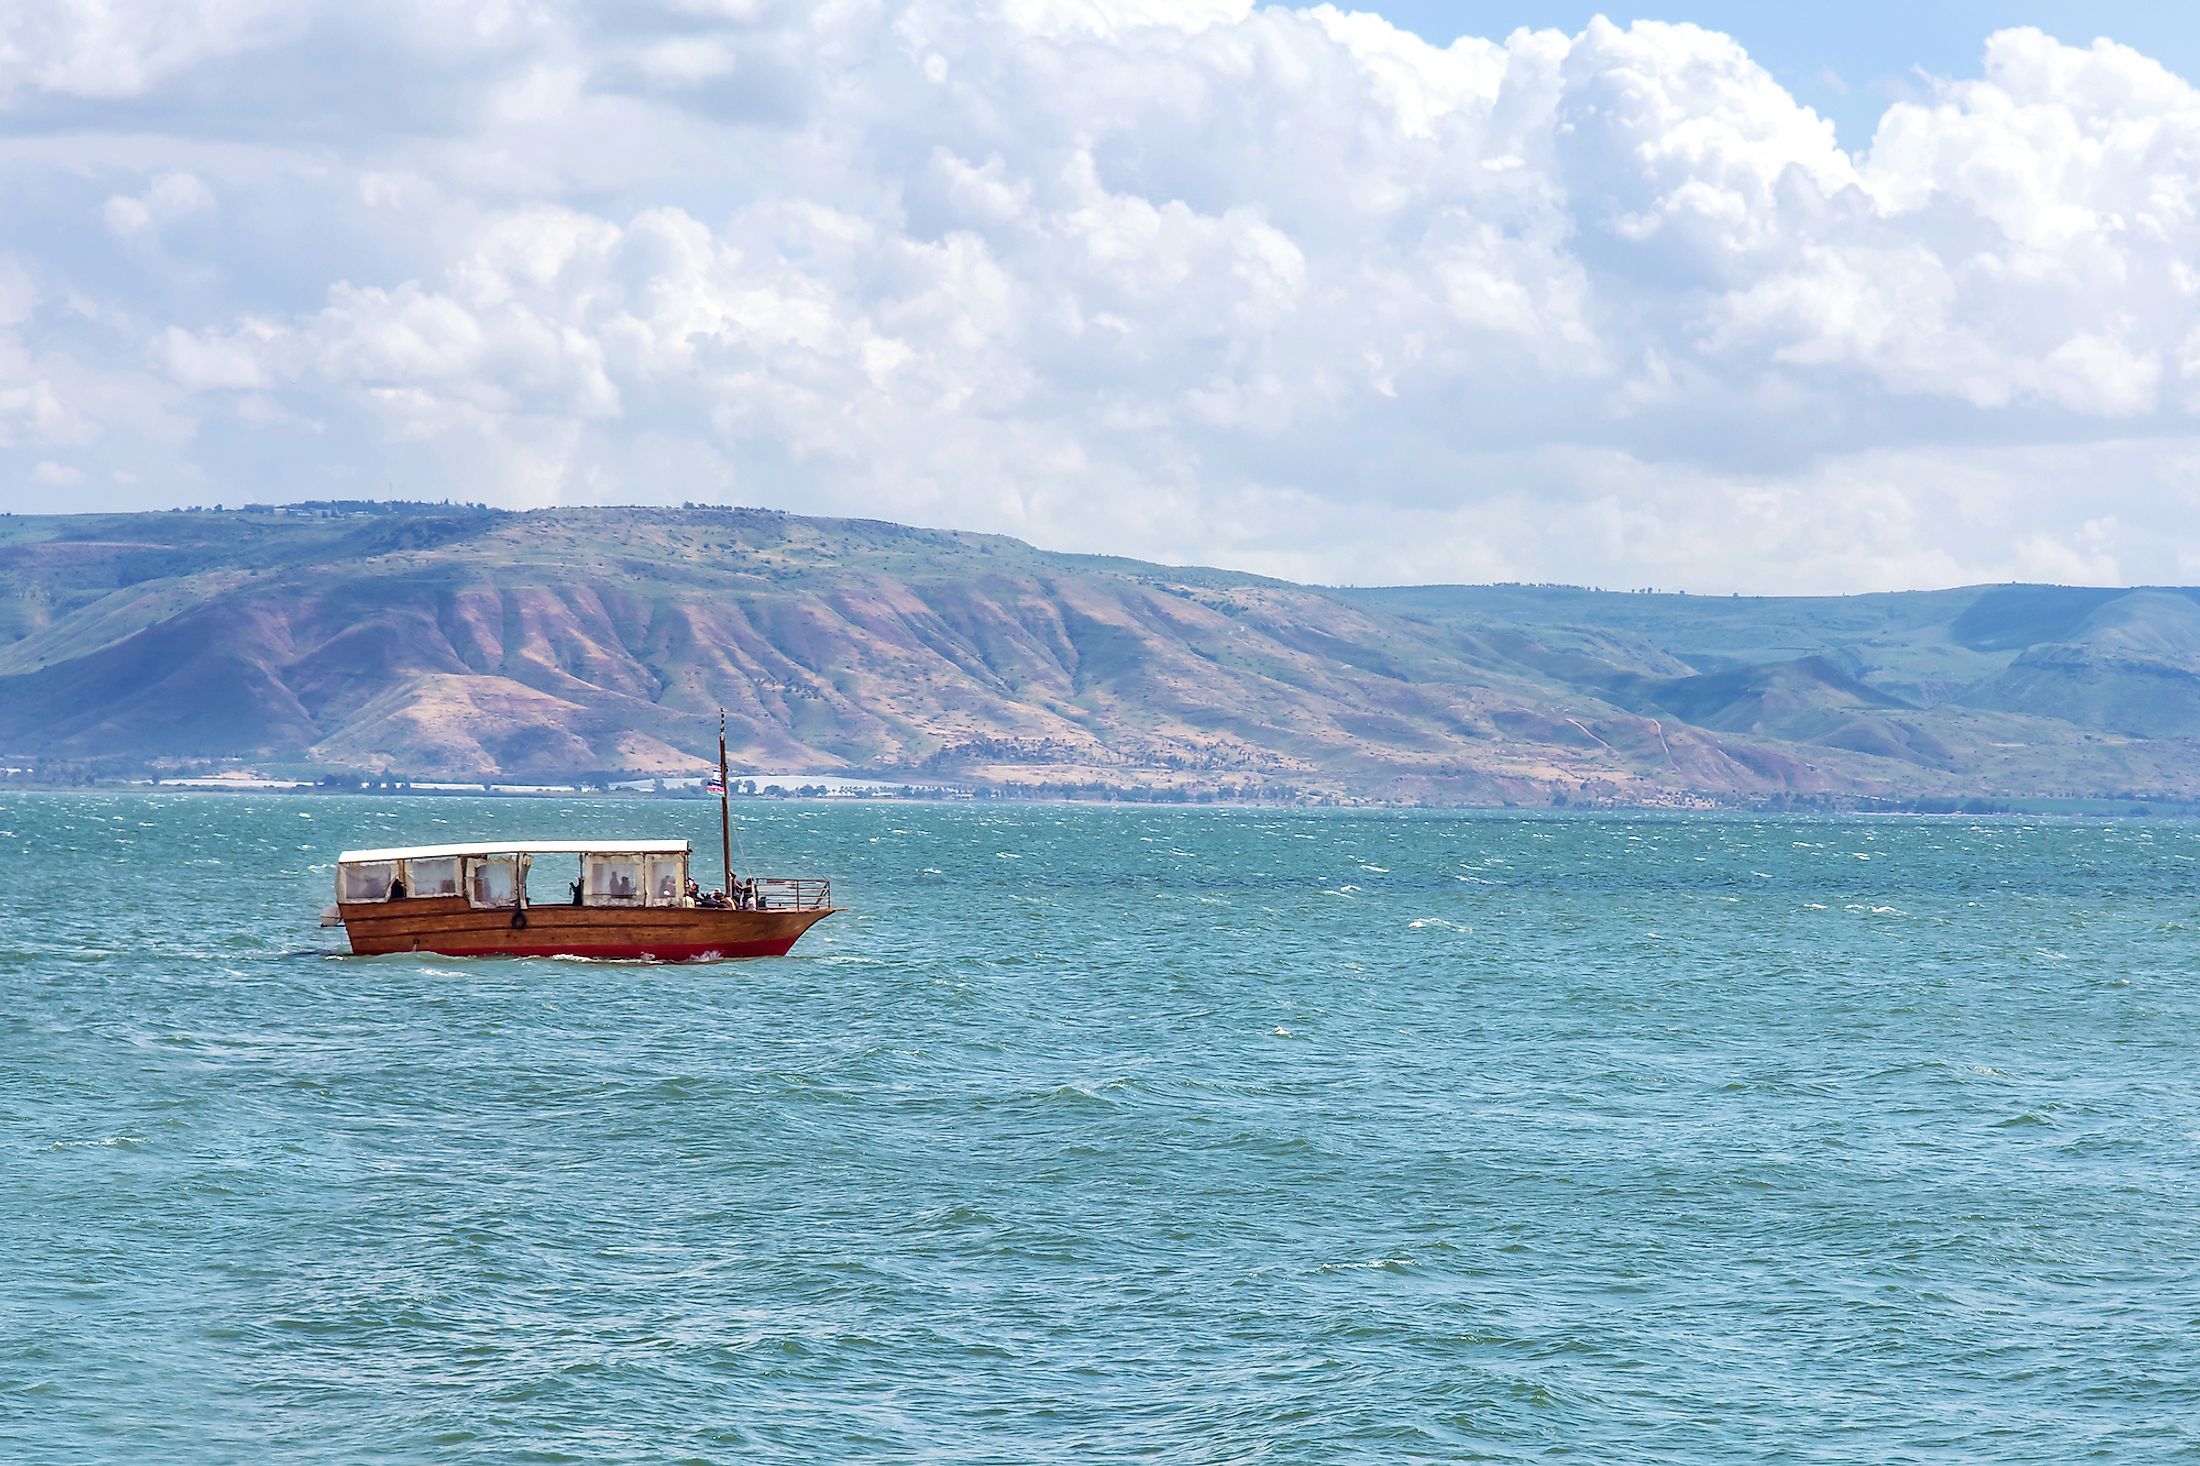 Boat at Sea of Galilee